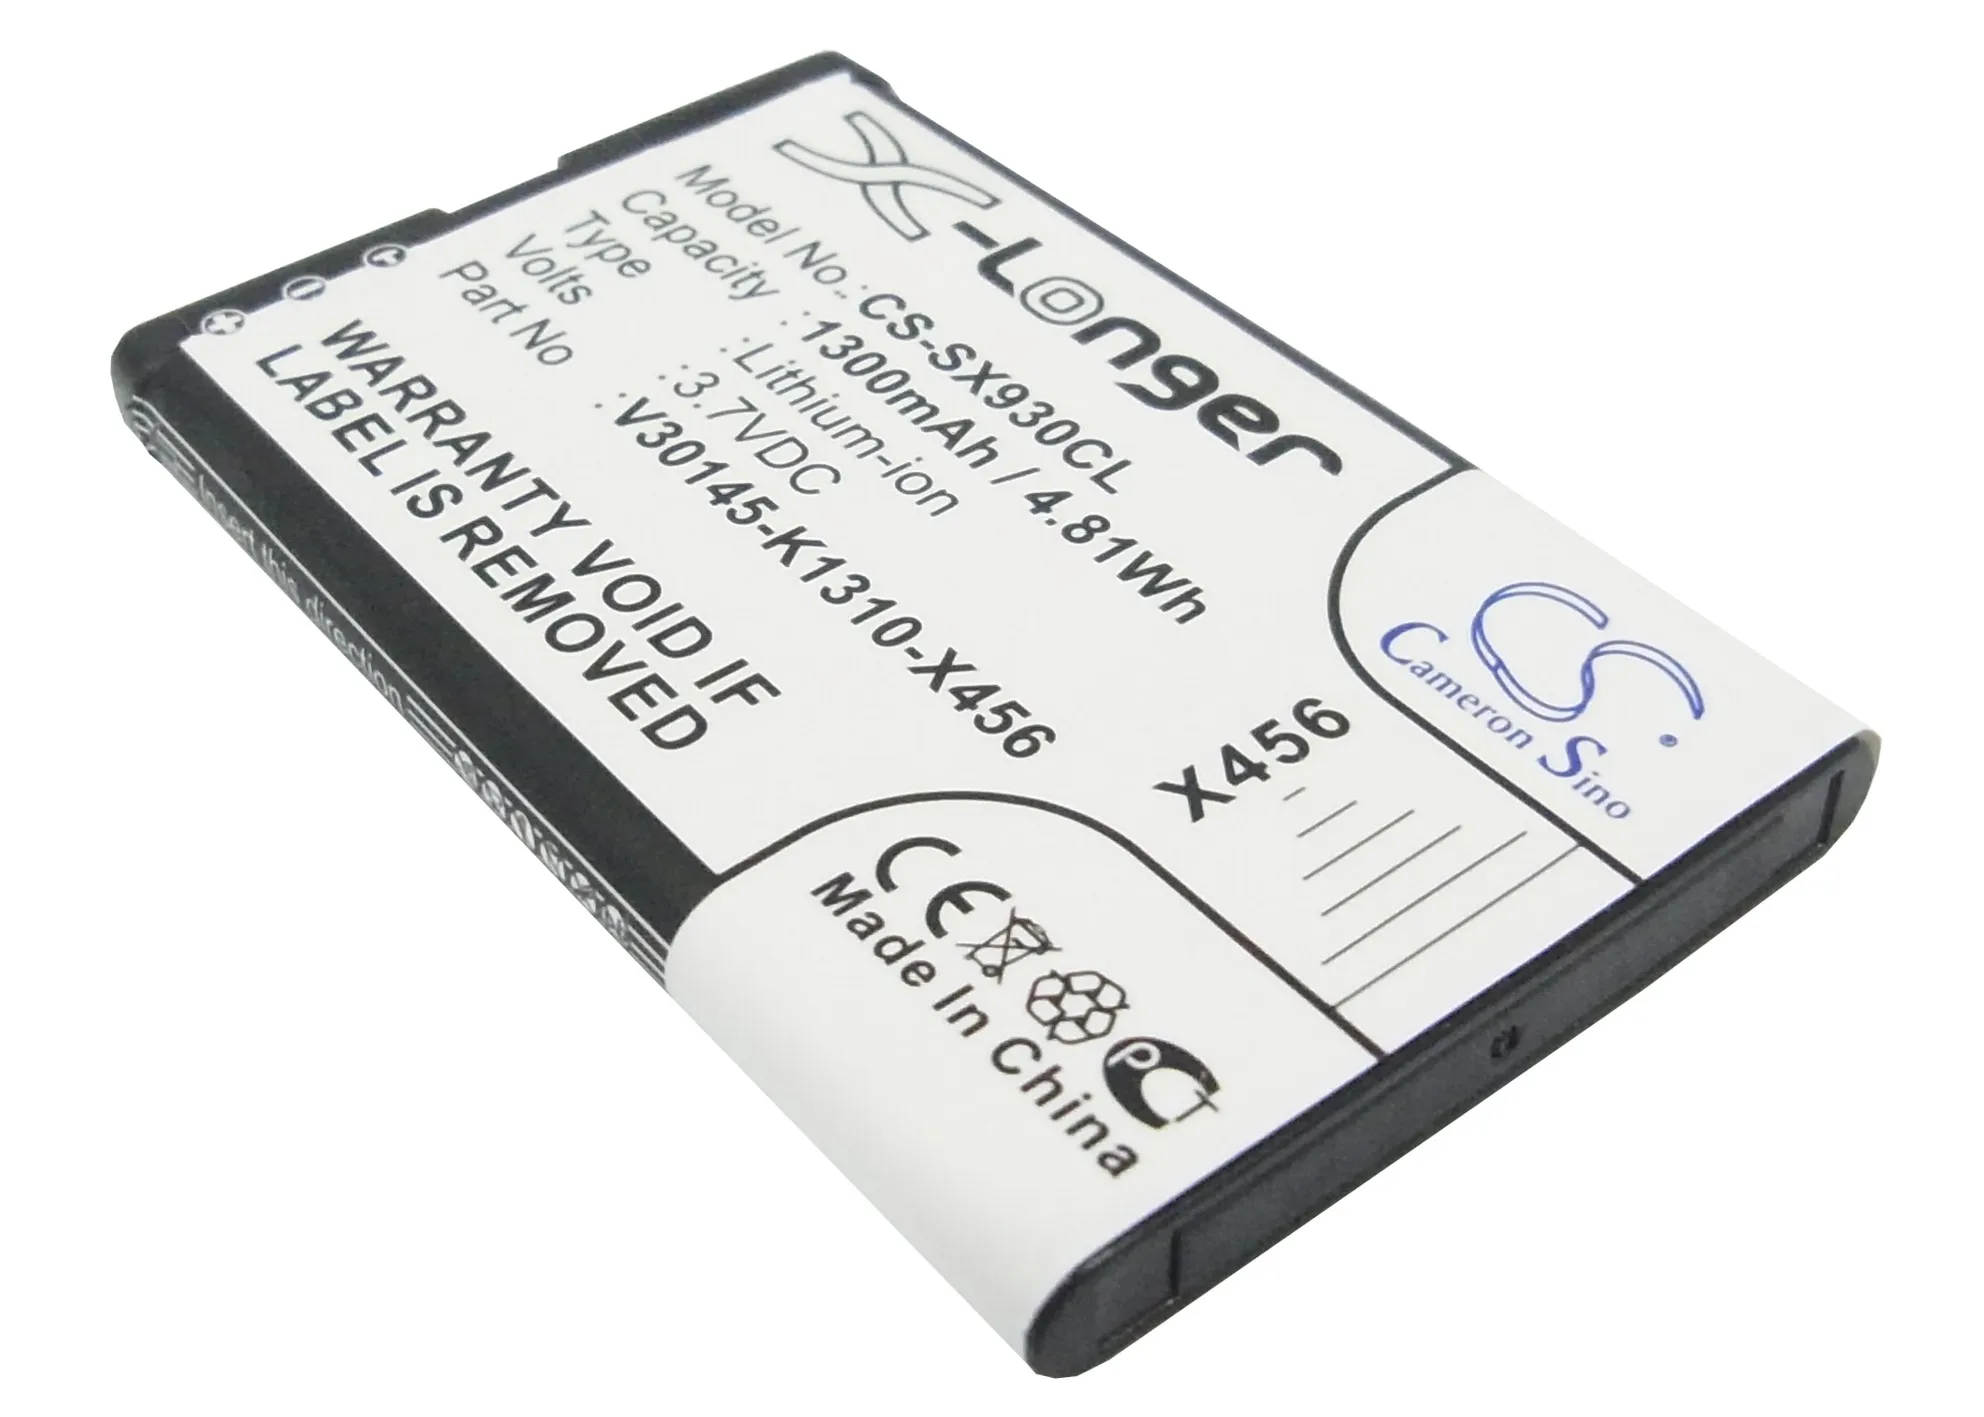 

CS Cordless Phone Battery for Siemens Gigaset SL930 SL930A SL930h Telekom Speedphone 701 fits V30145-K1310-X456 1300mAh